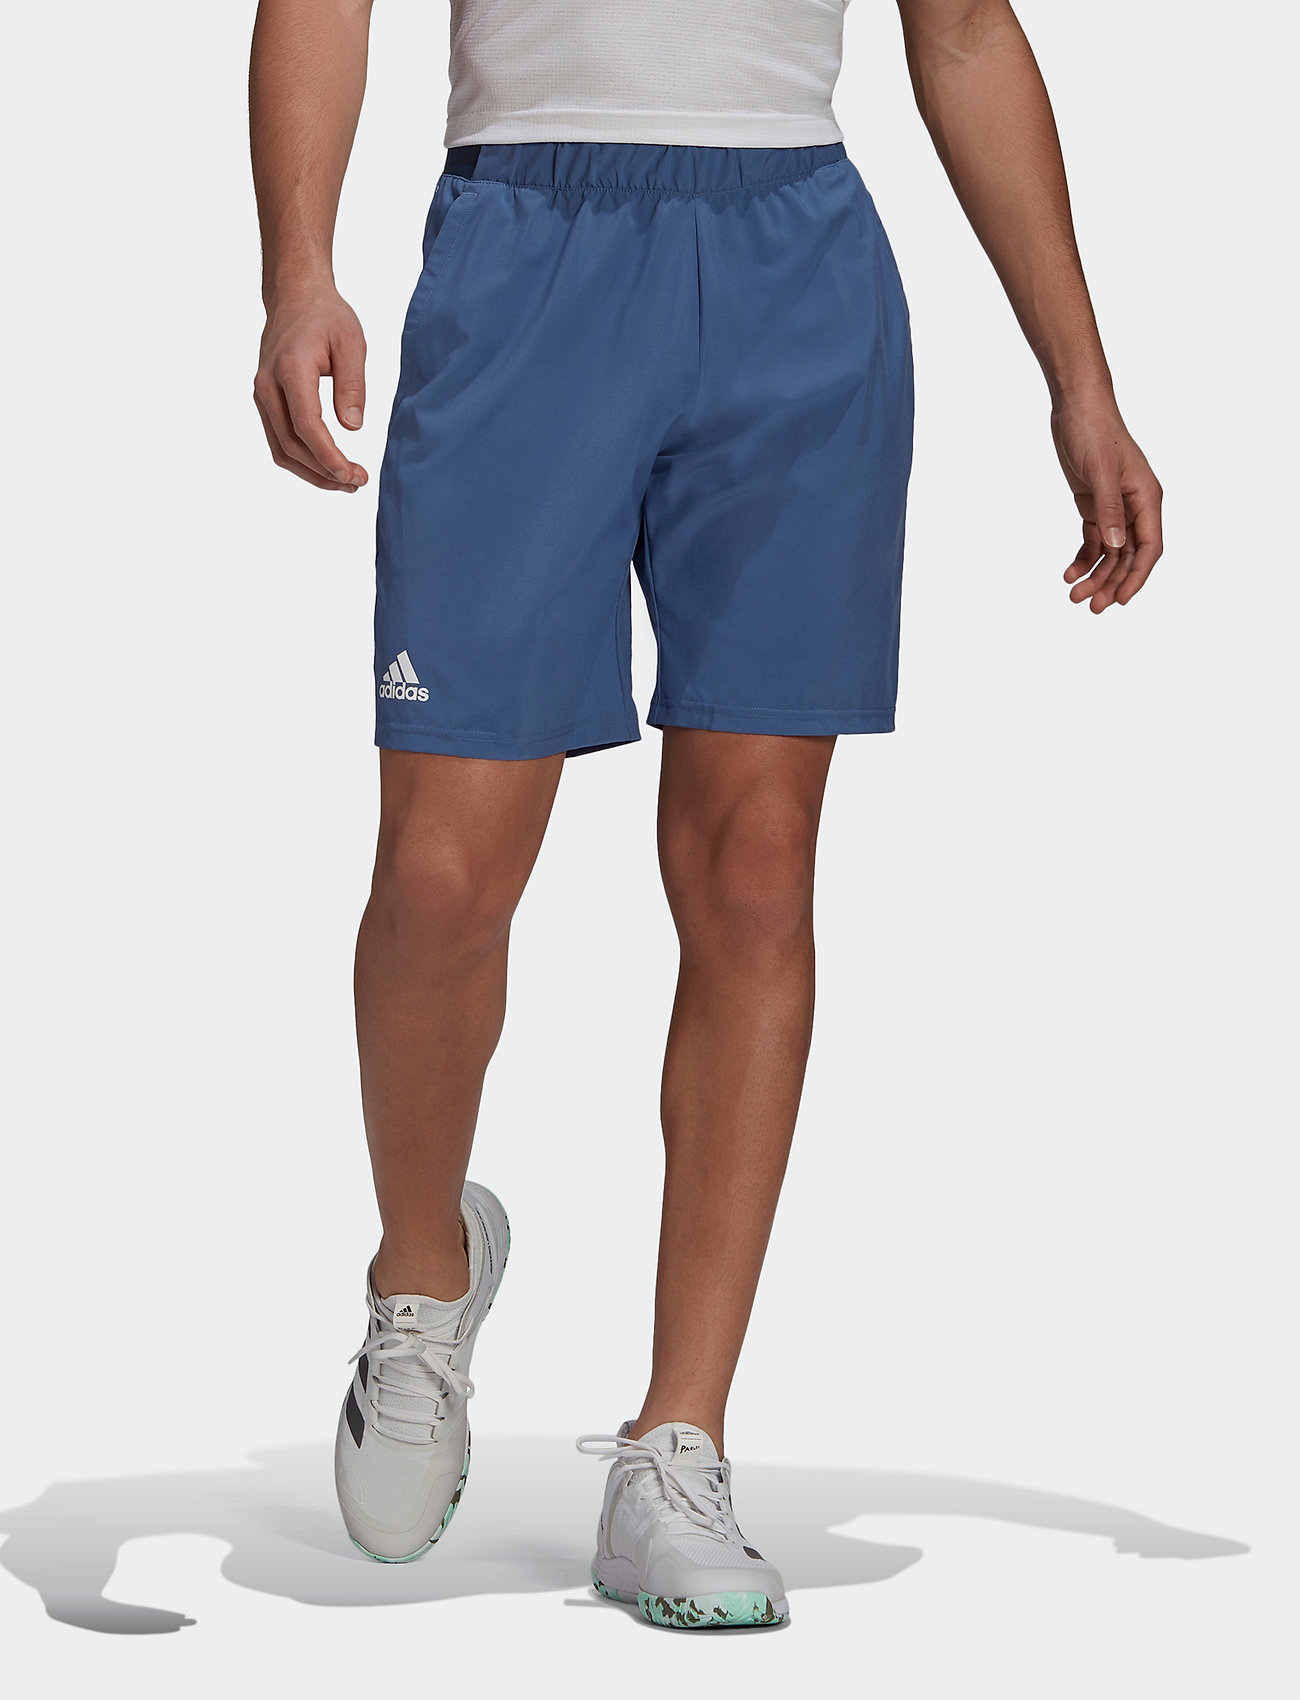 Adidas Club SW short. Мужские шорты адидас Climalite коллекция 2020 года серые. Short club